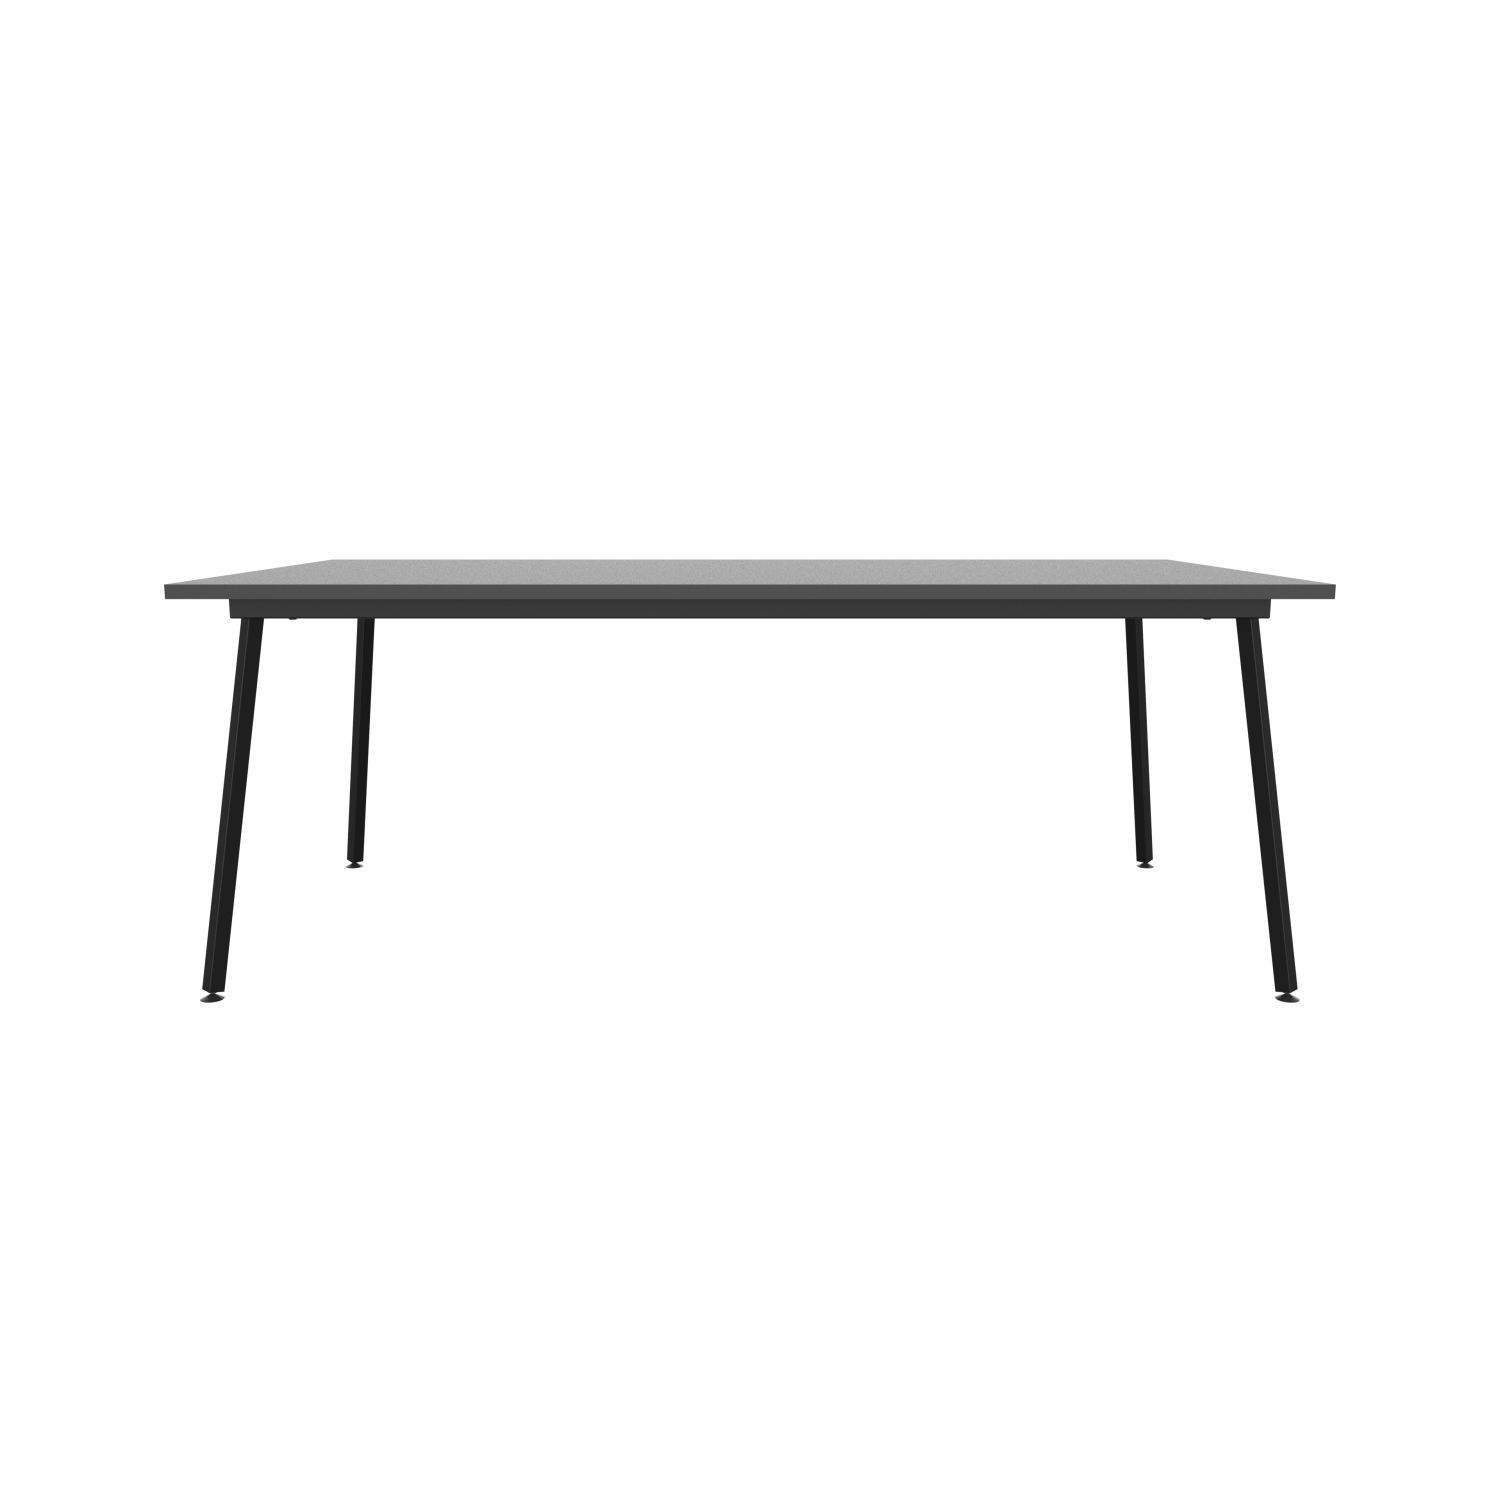 lensvelt maarten baas table fixed height 100x200 table top 26 mm top melamine black edge abs black black frame ral9005